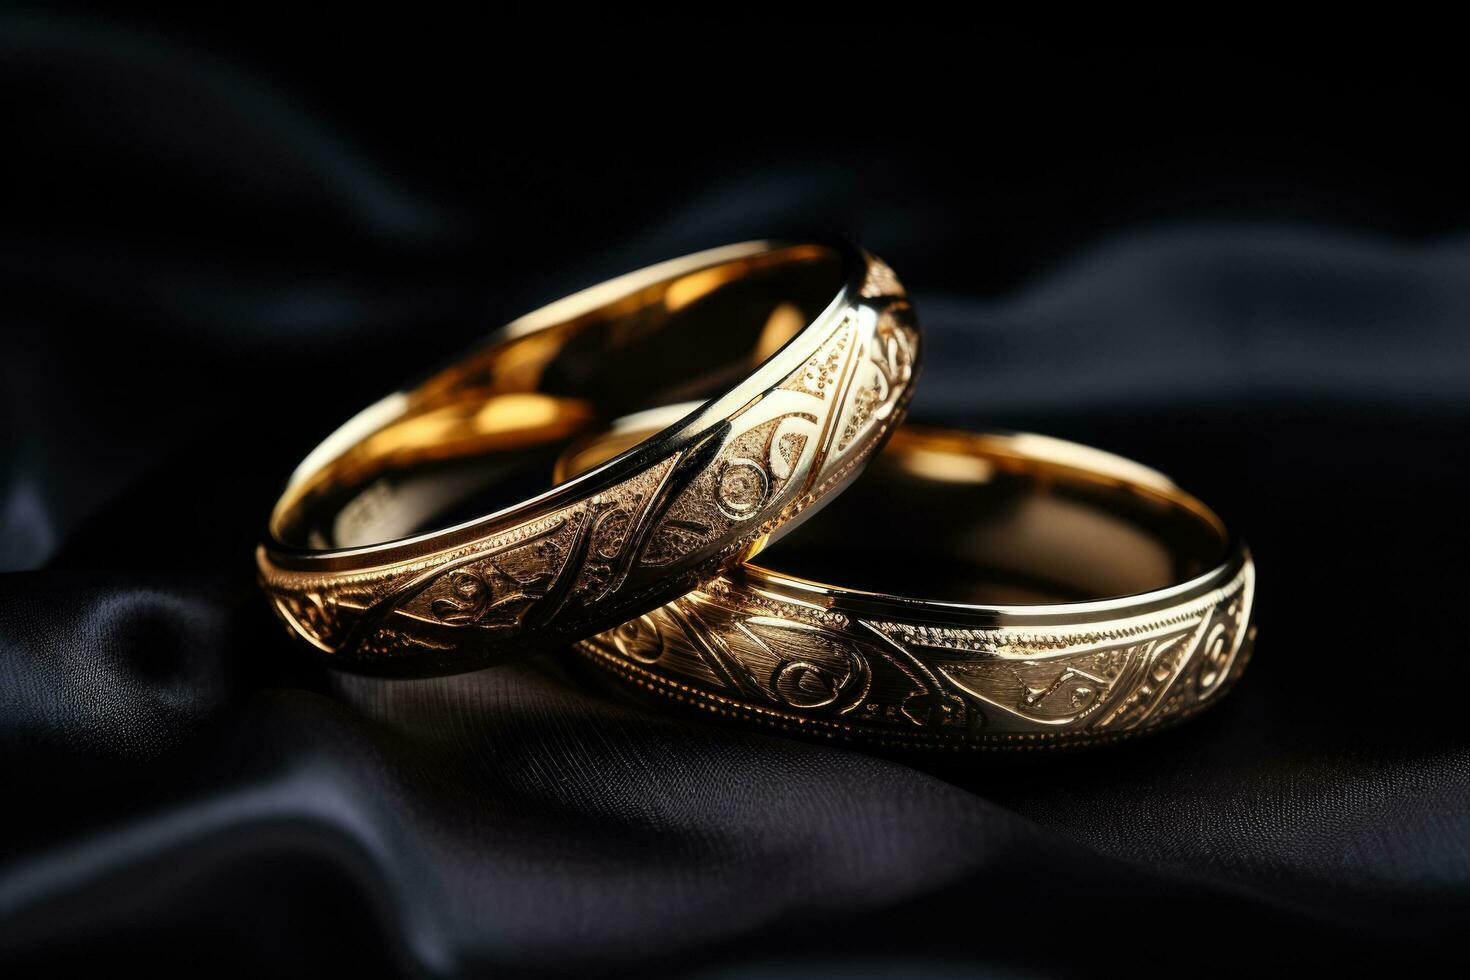 anillos de boda de oro sobre fondo blanco foto